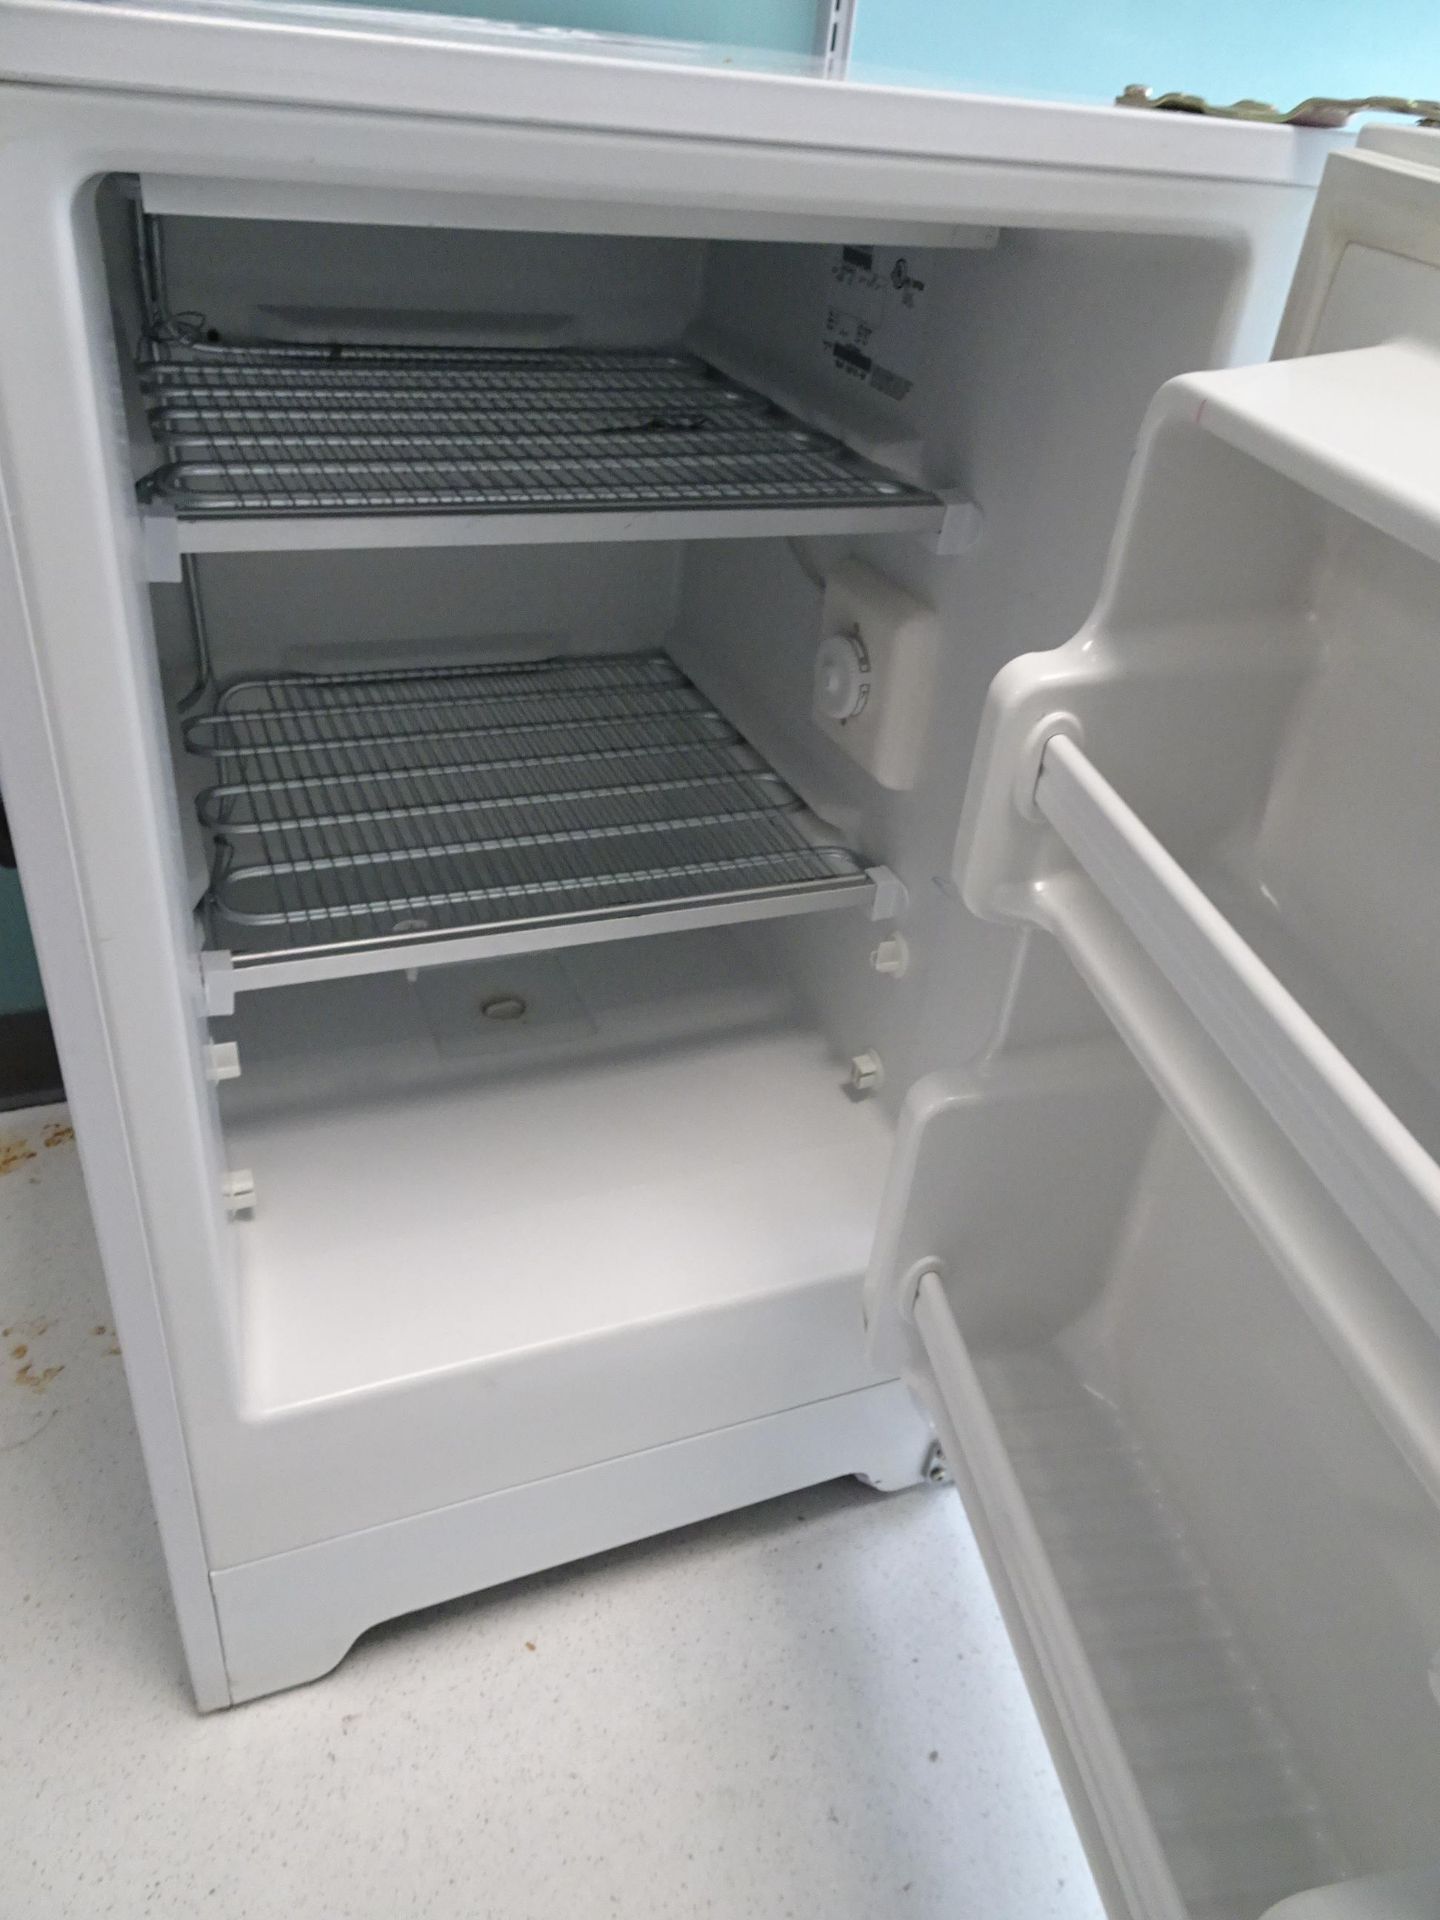 Kendro Laboratory Products Model U2005GA15 Under CabinetRefrigerator / Freezer sn R04N-628718-RN - Image 2 of 5